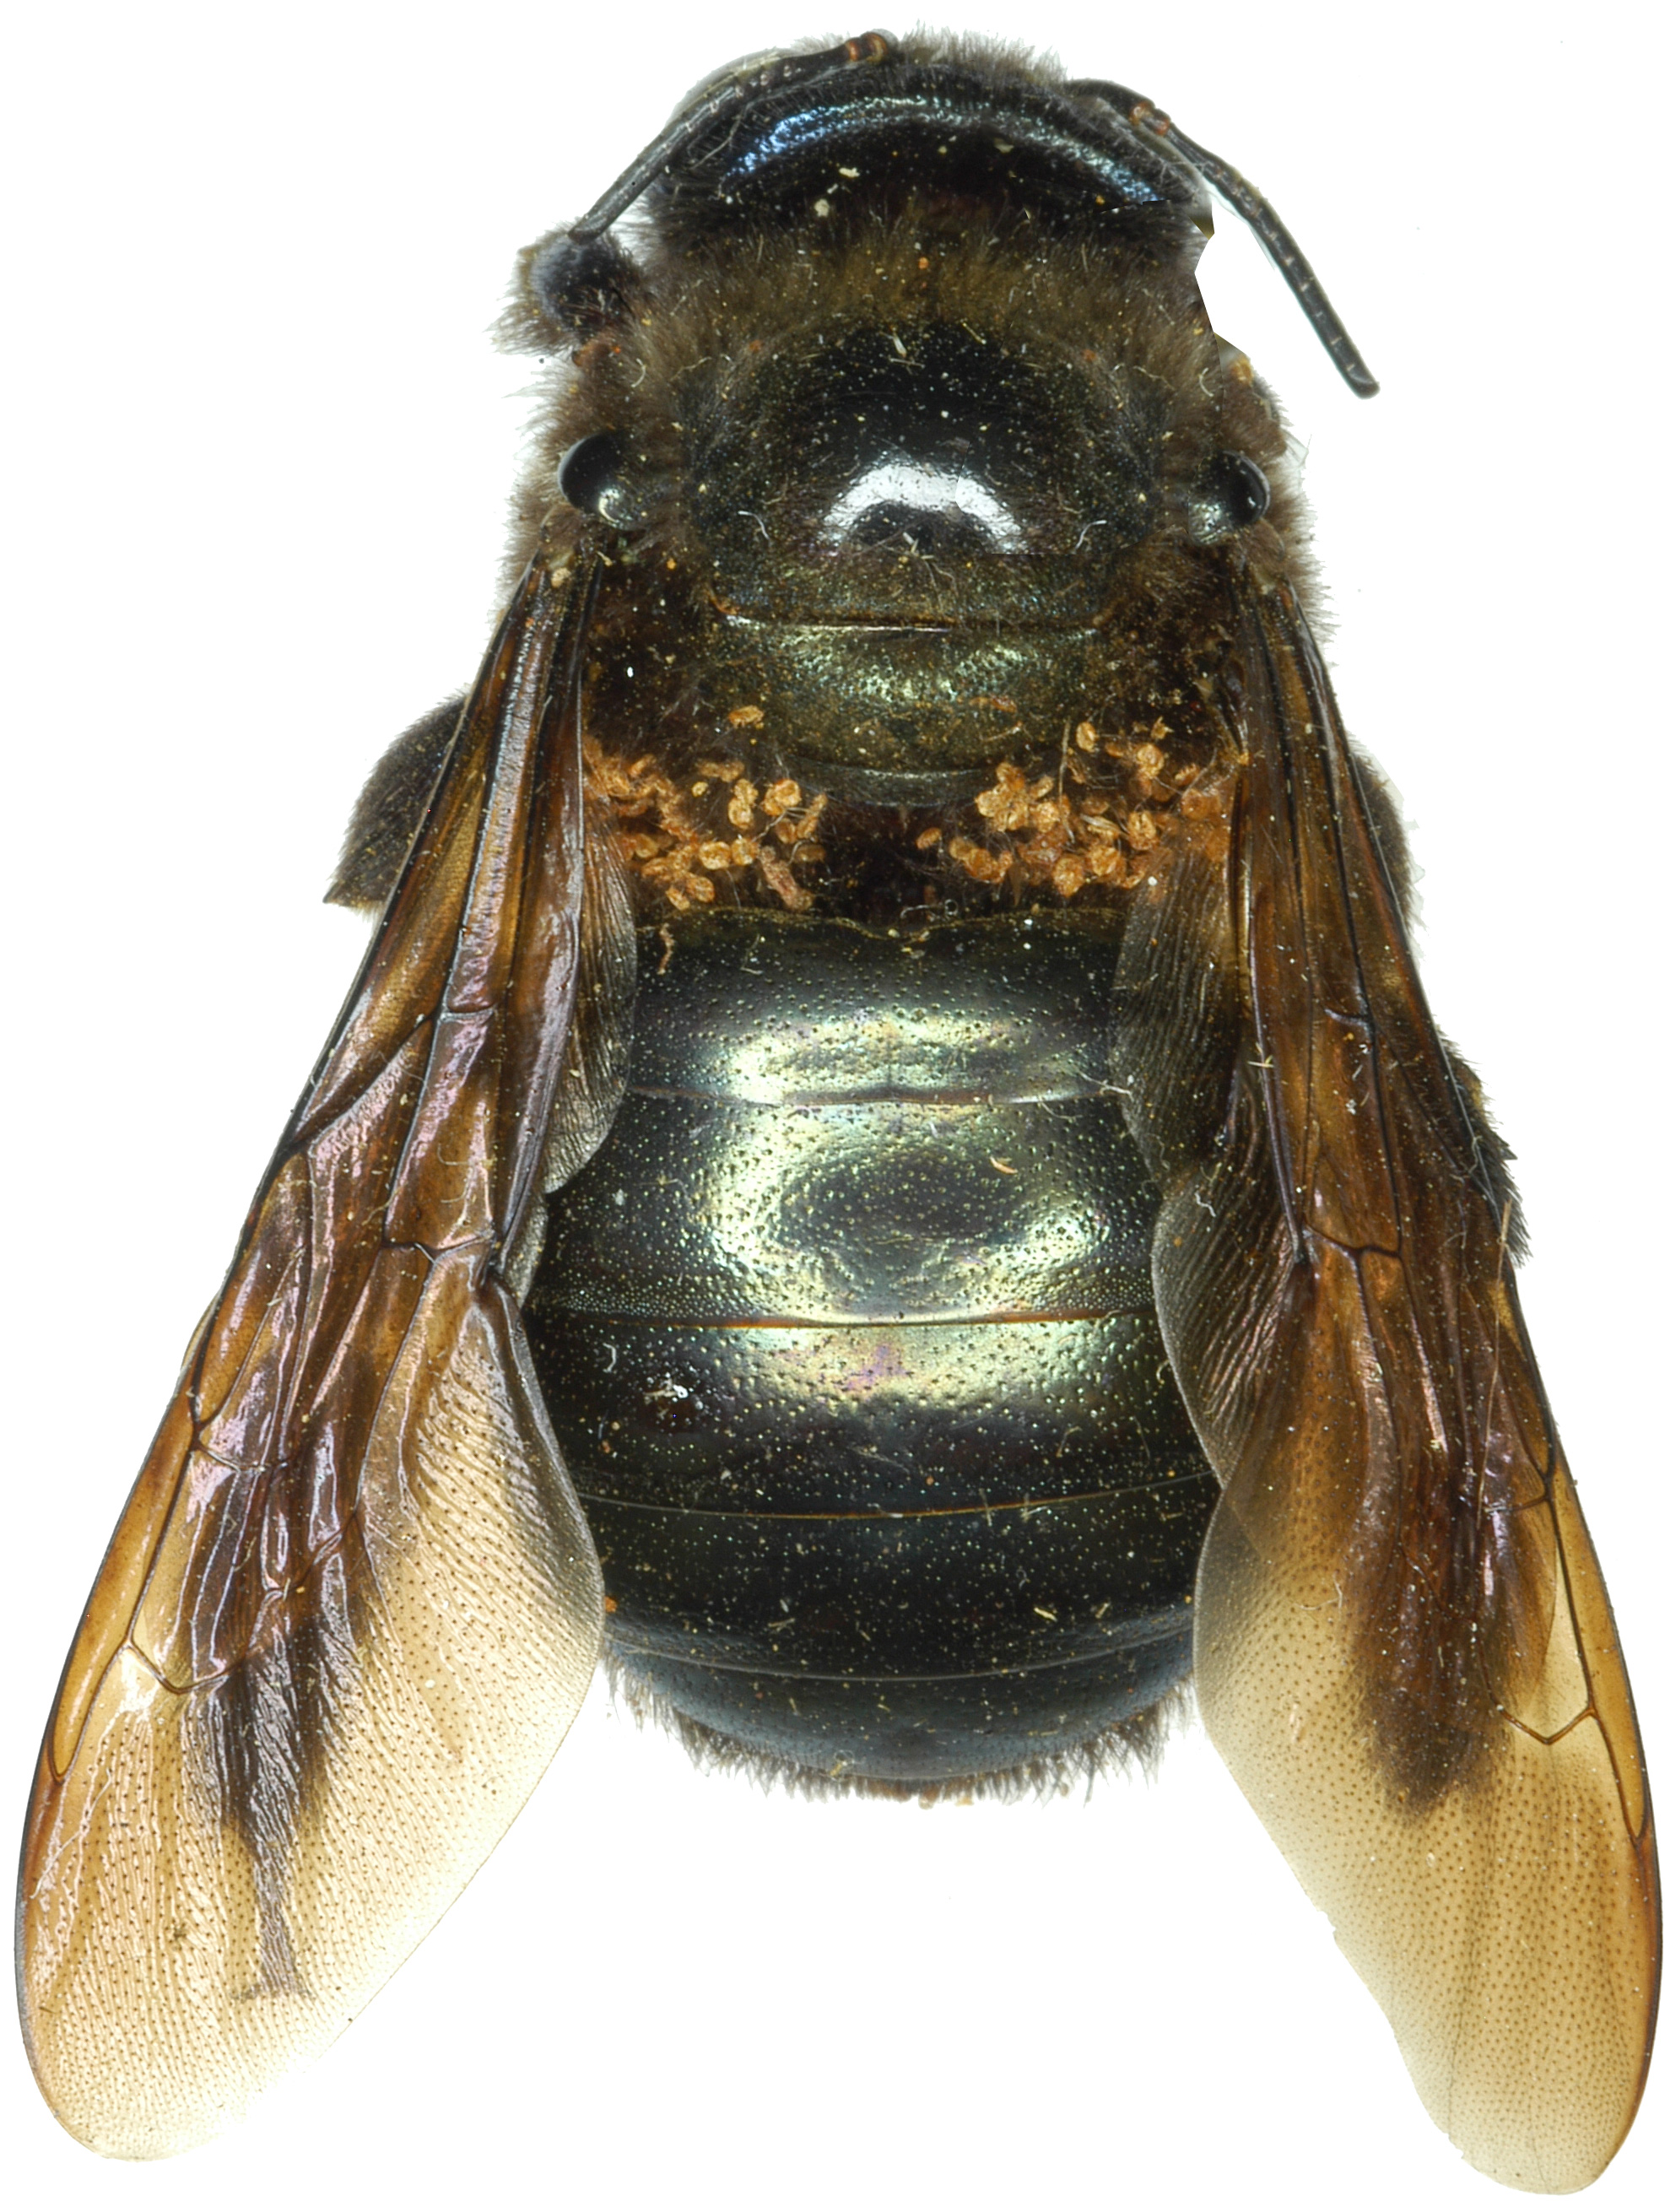 mite Sennertia segnis phoretic on carpenter bee Xylocopa californica